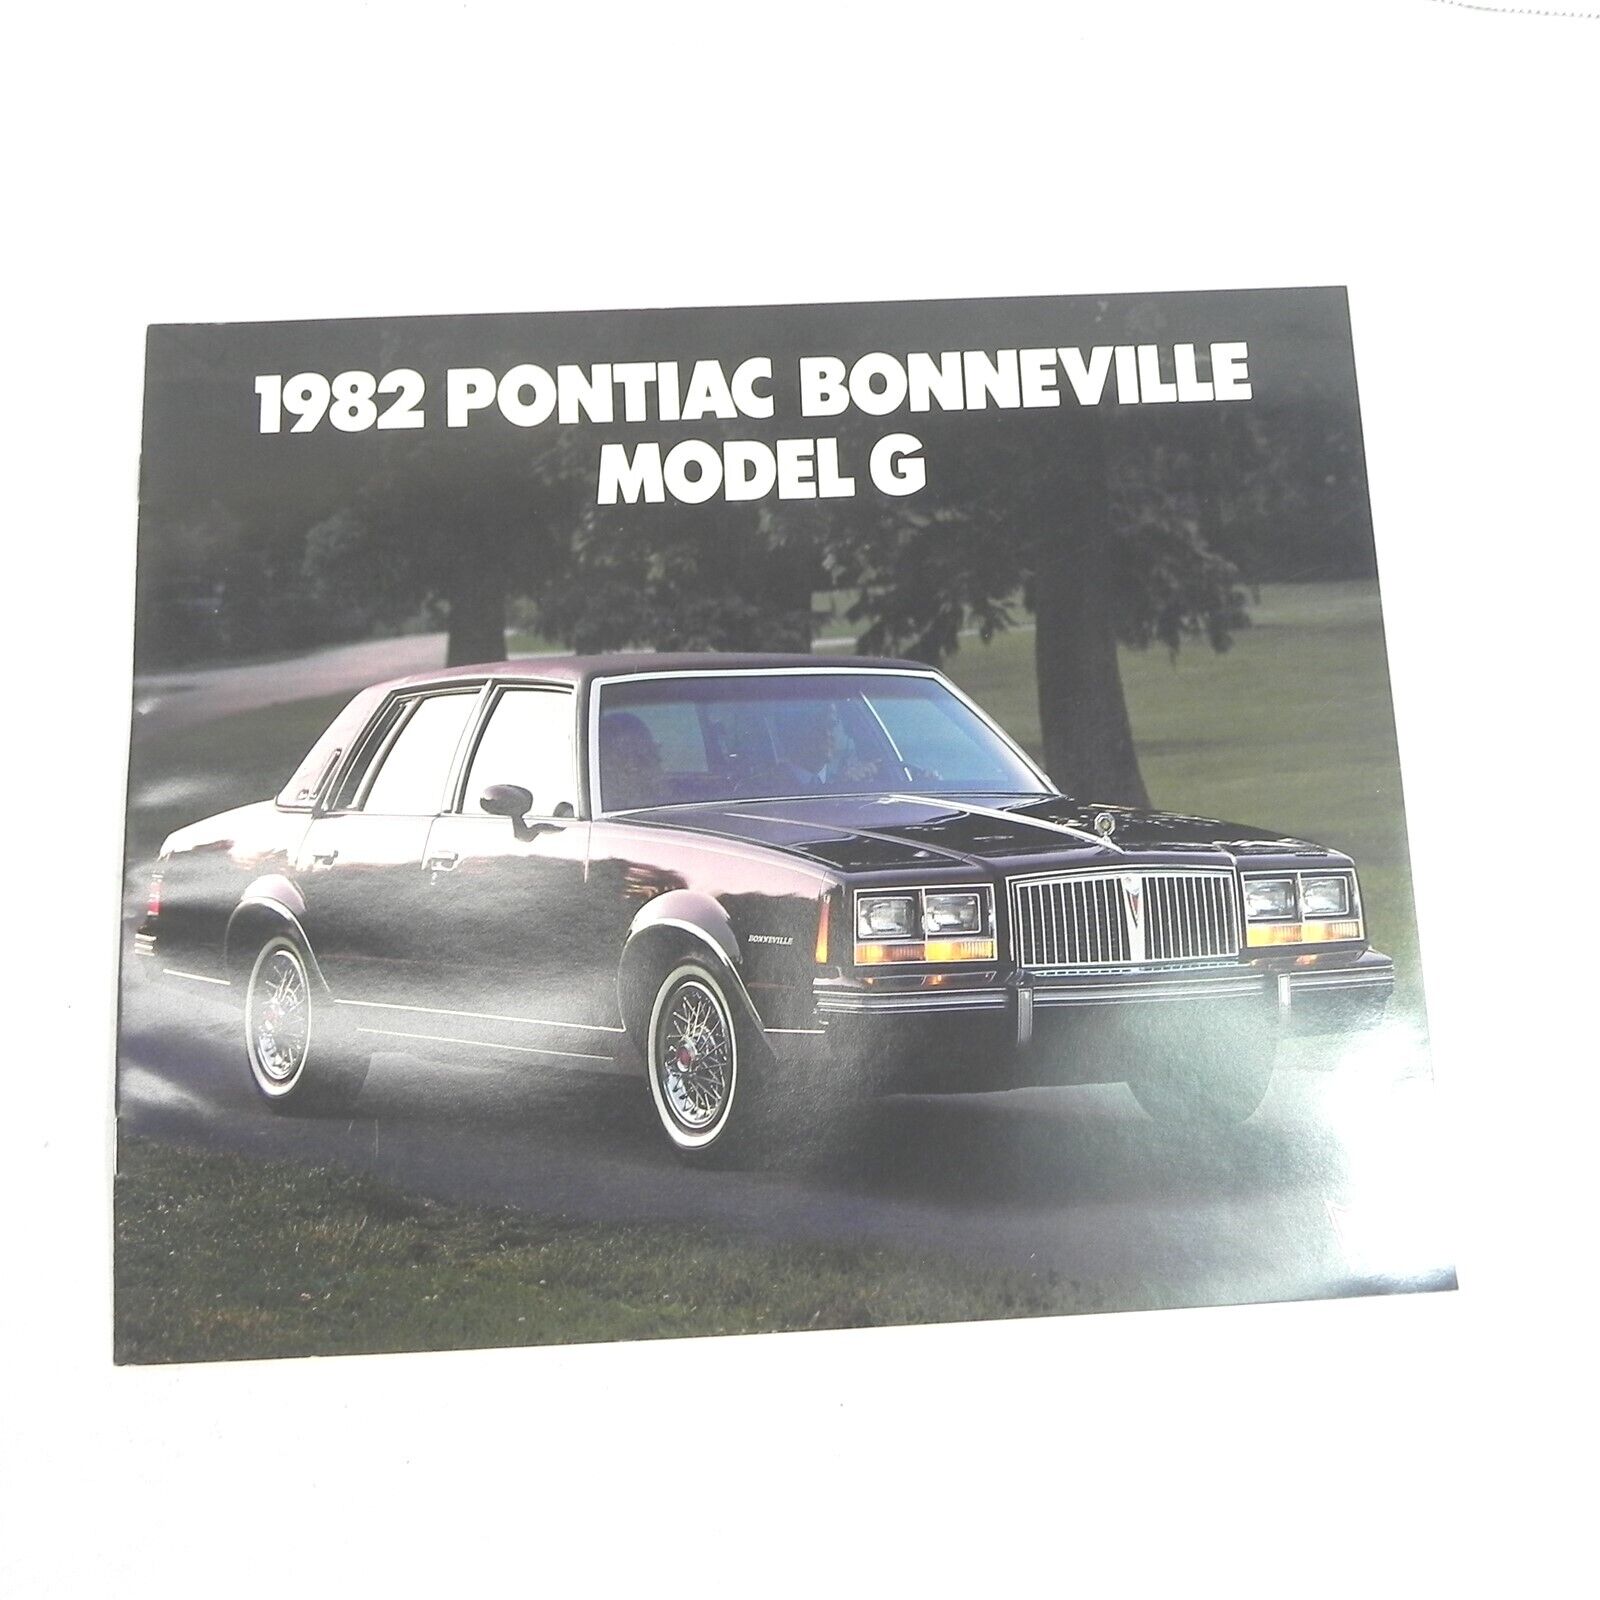 VINTAGE 1982 PONTIAC BONNEVILLE MODEL G DEALERSHIP SALES BROCHURE SPECIFICATIONS